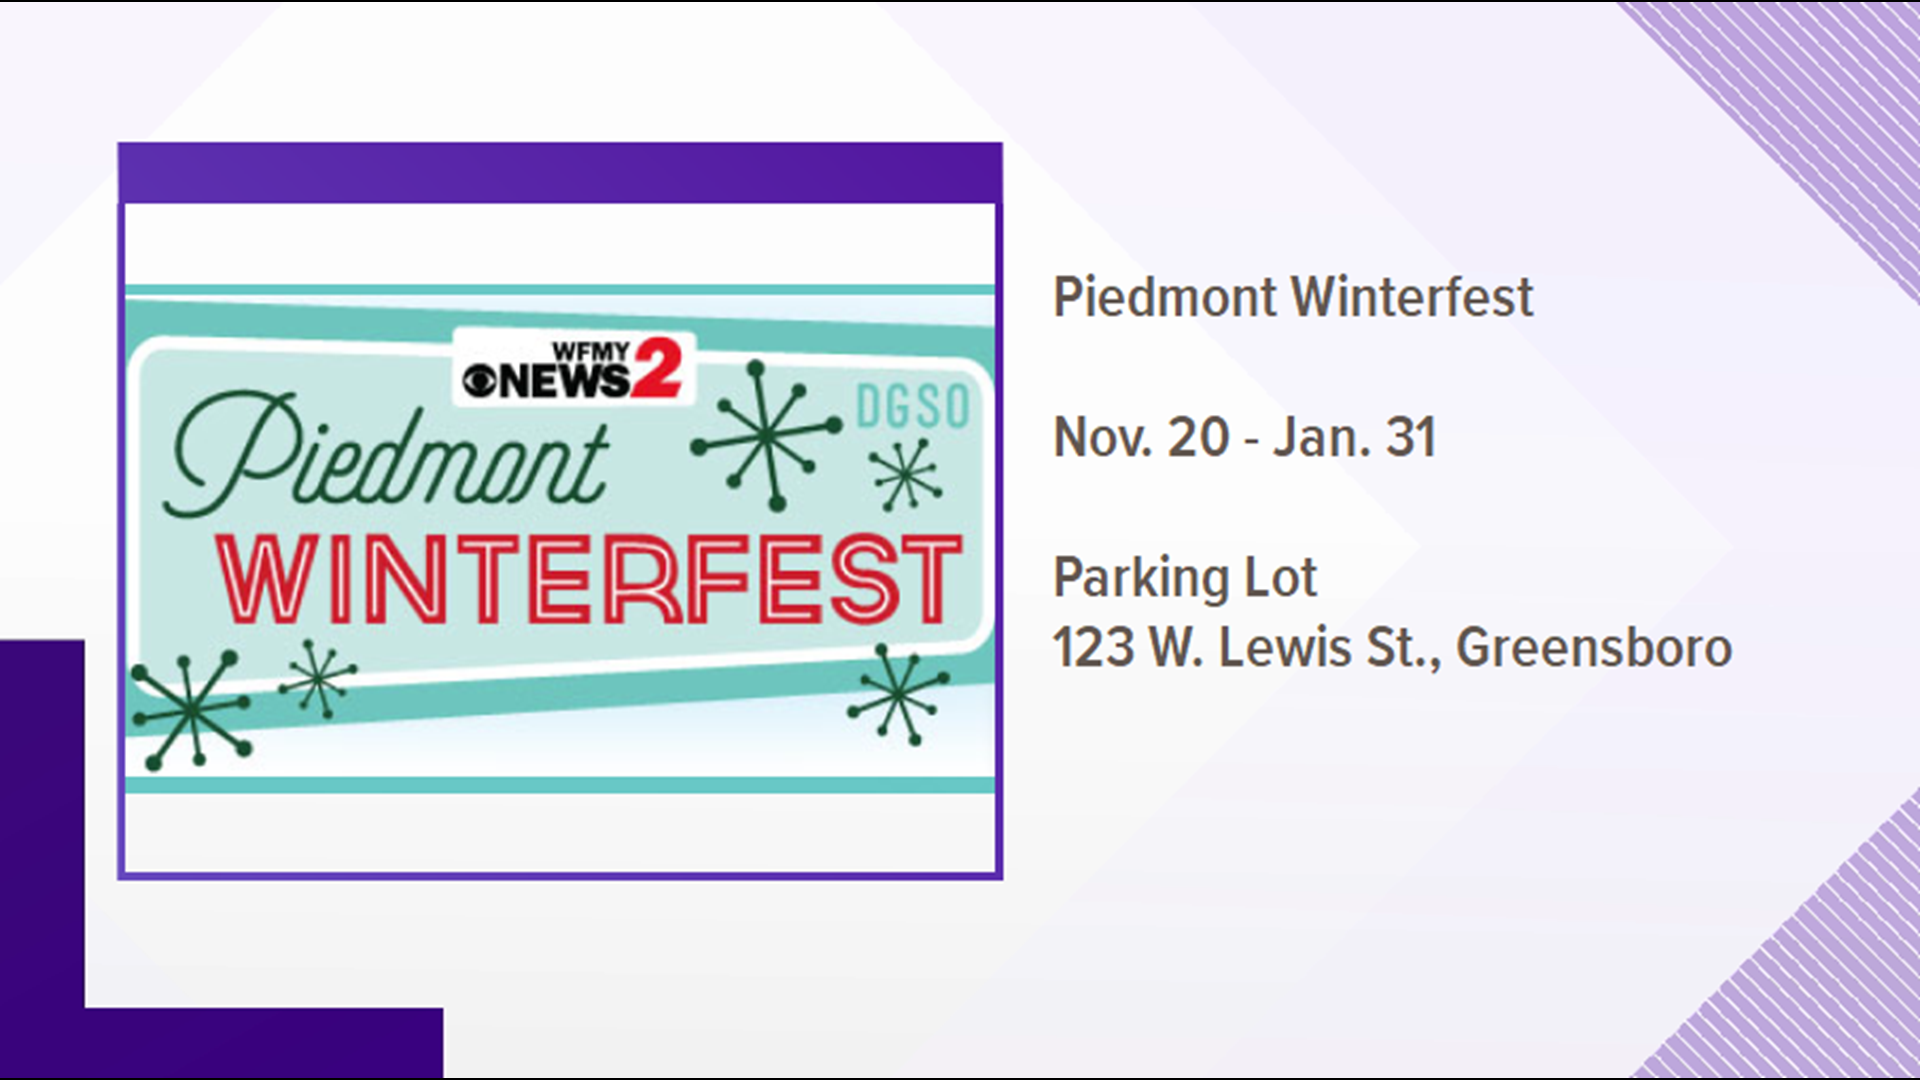 Piedmont Winterfest runs from November 20 to January 31.